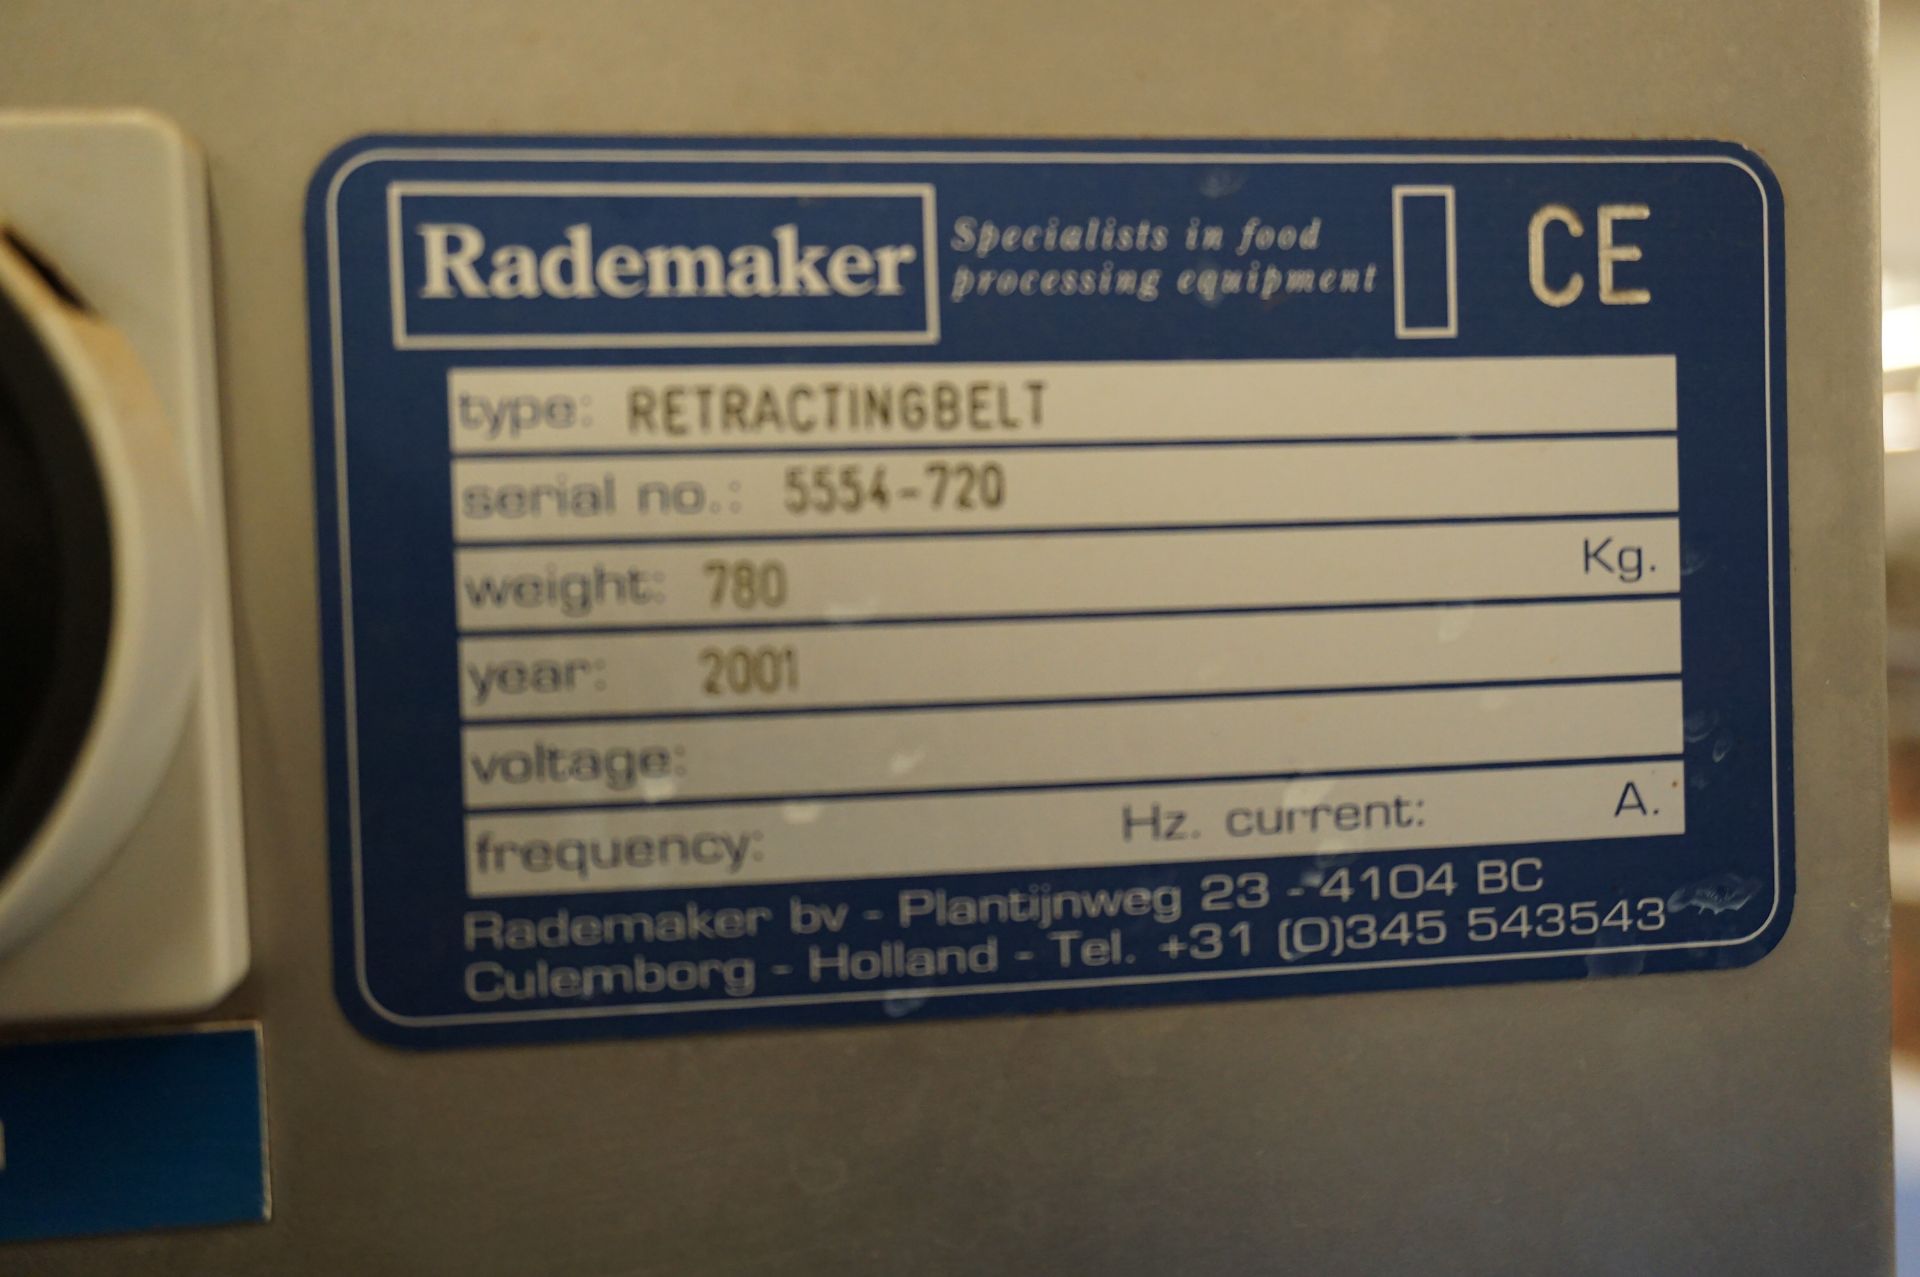 Rademaker, motorised retracting belt conveyor, Serial No. 5554-720 (2001) with control panel, Approx - Image 3 of 4